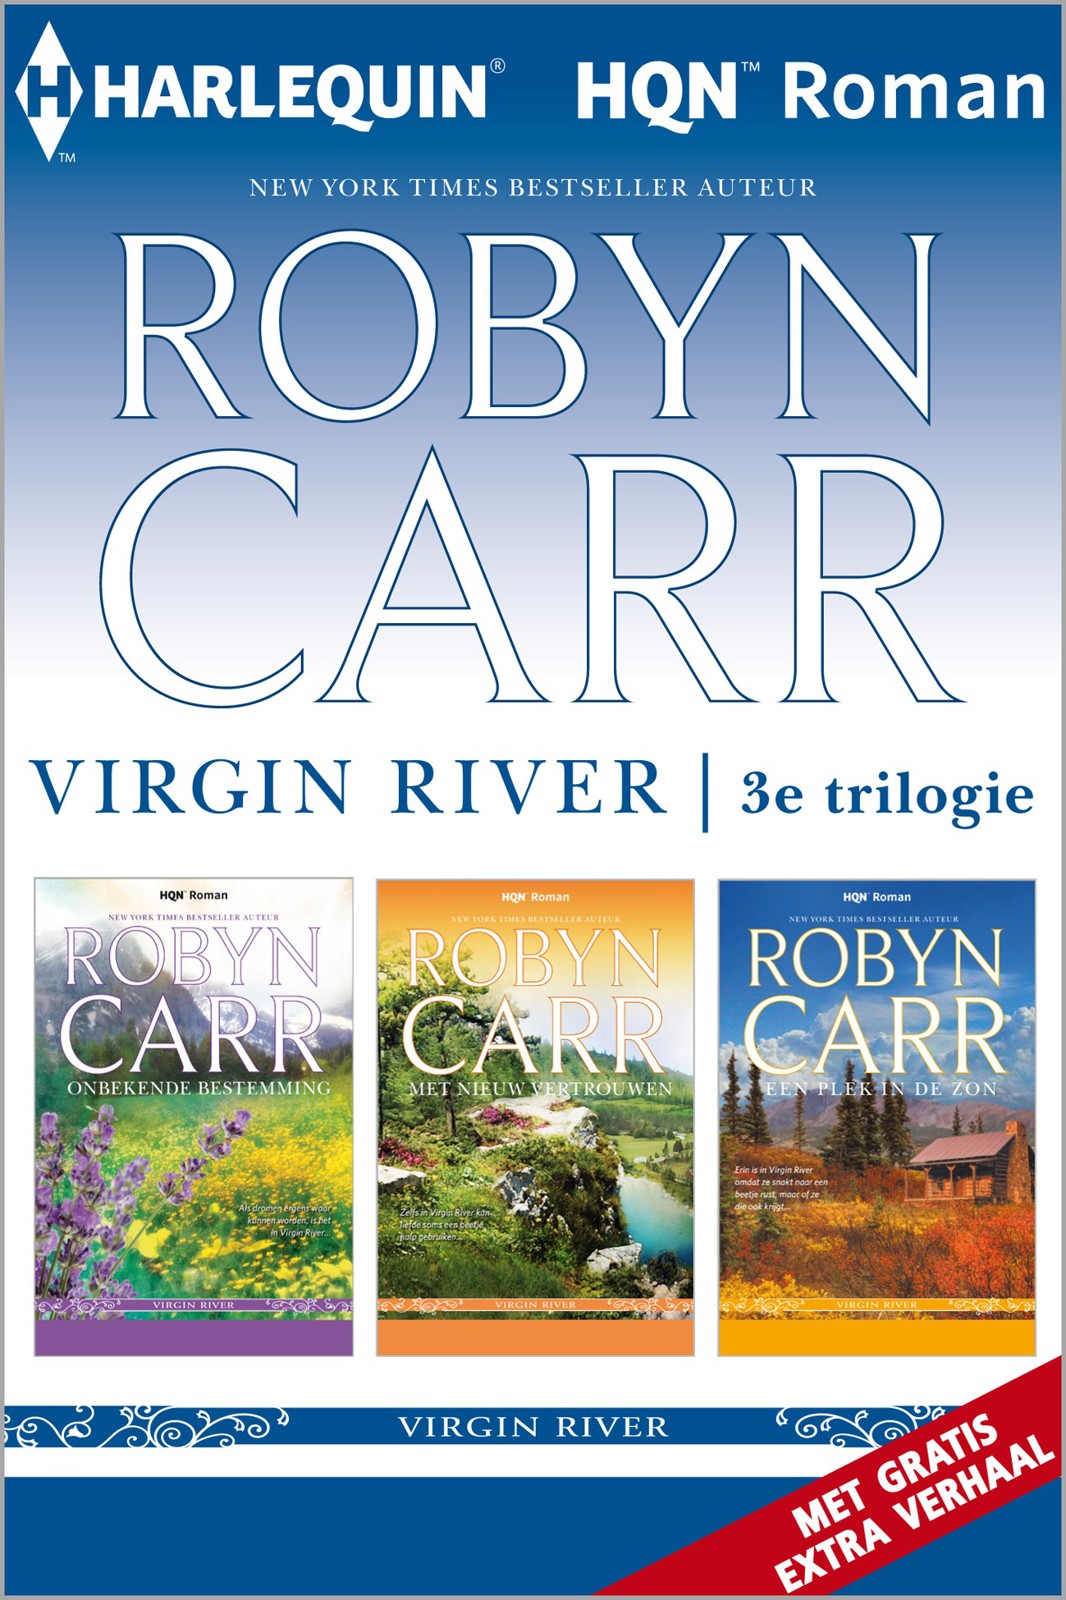 Virgin River 3e trilogie